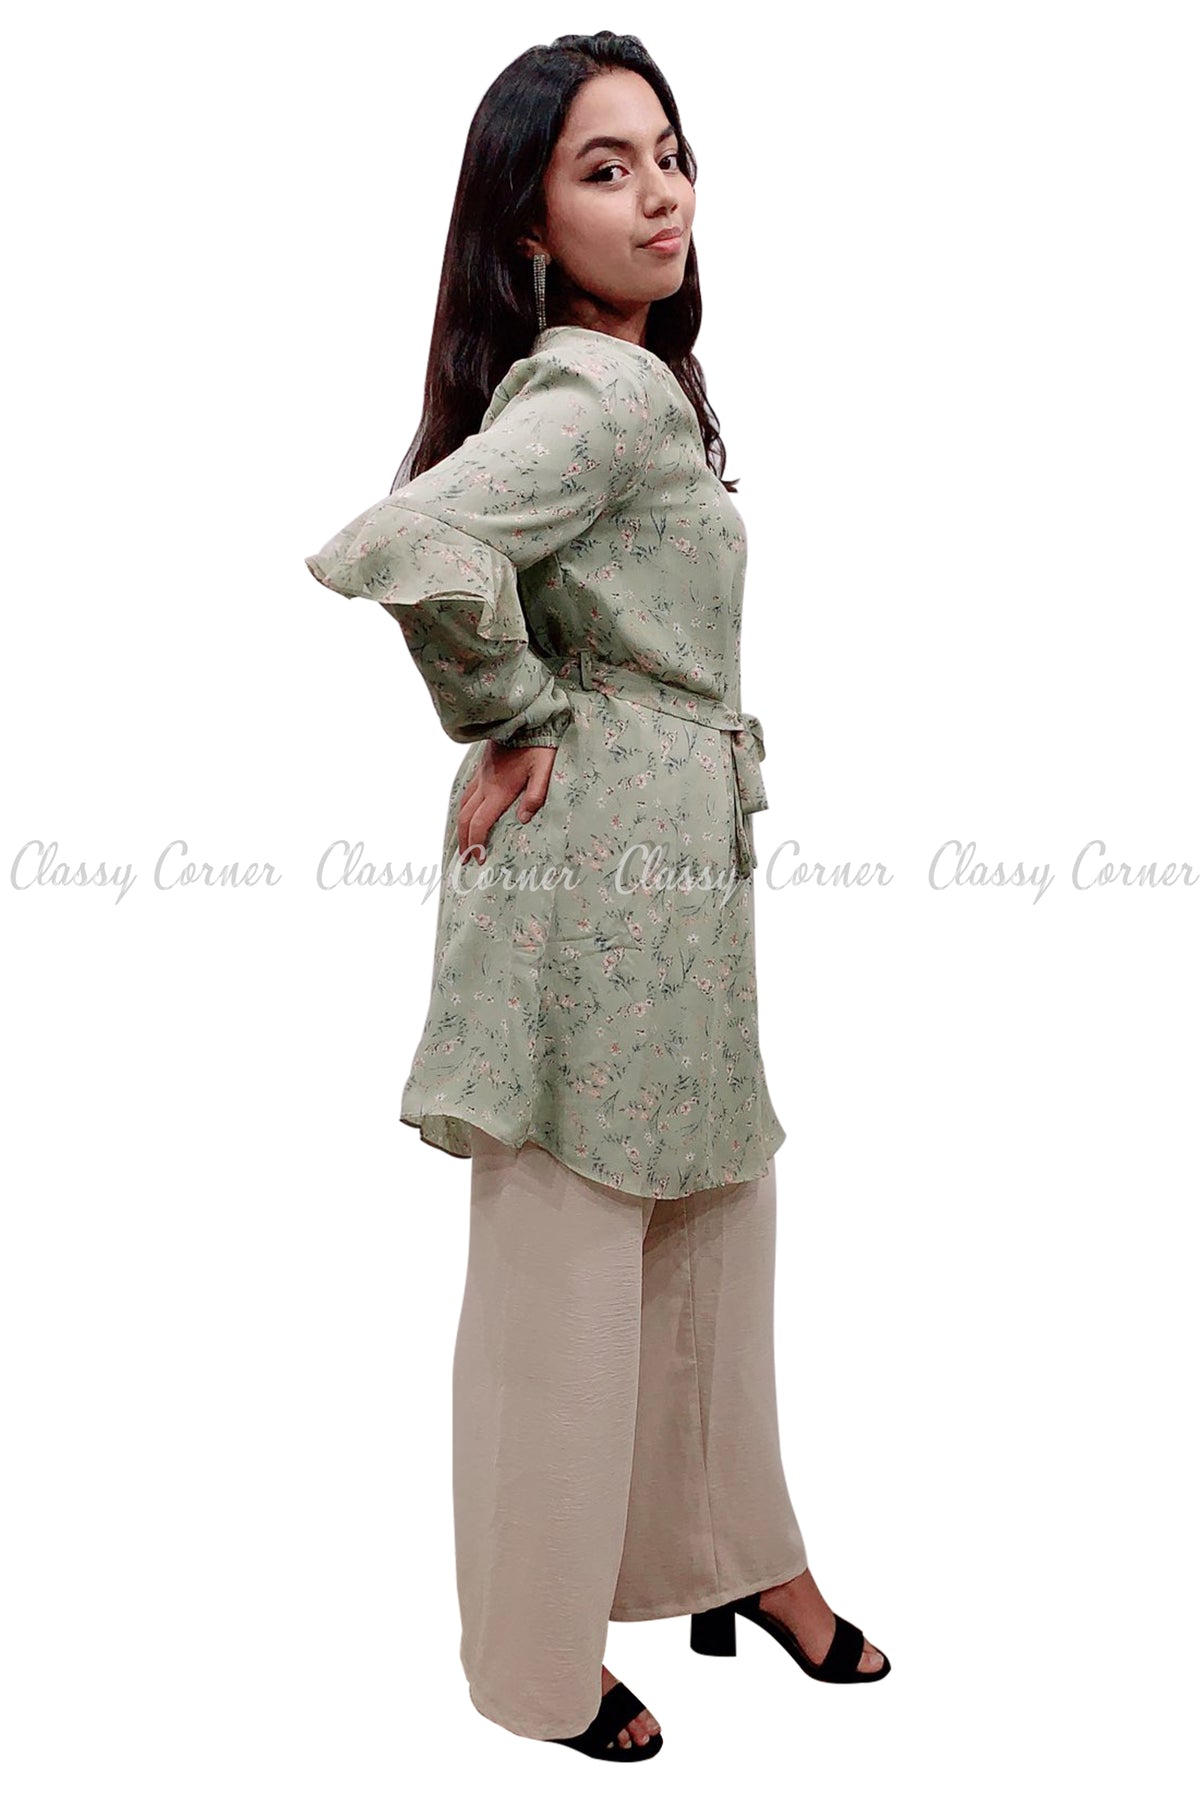 Floral Print Ruffle Sleeves Green Modest Tunic Dress - Classy Corner